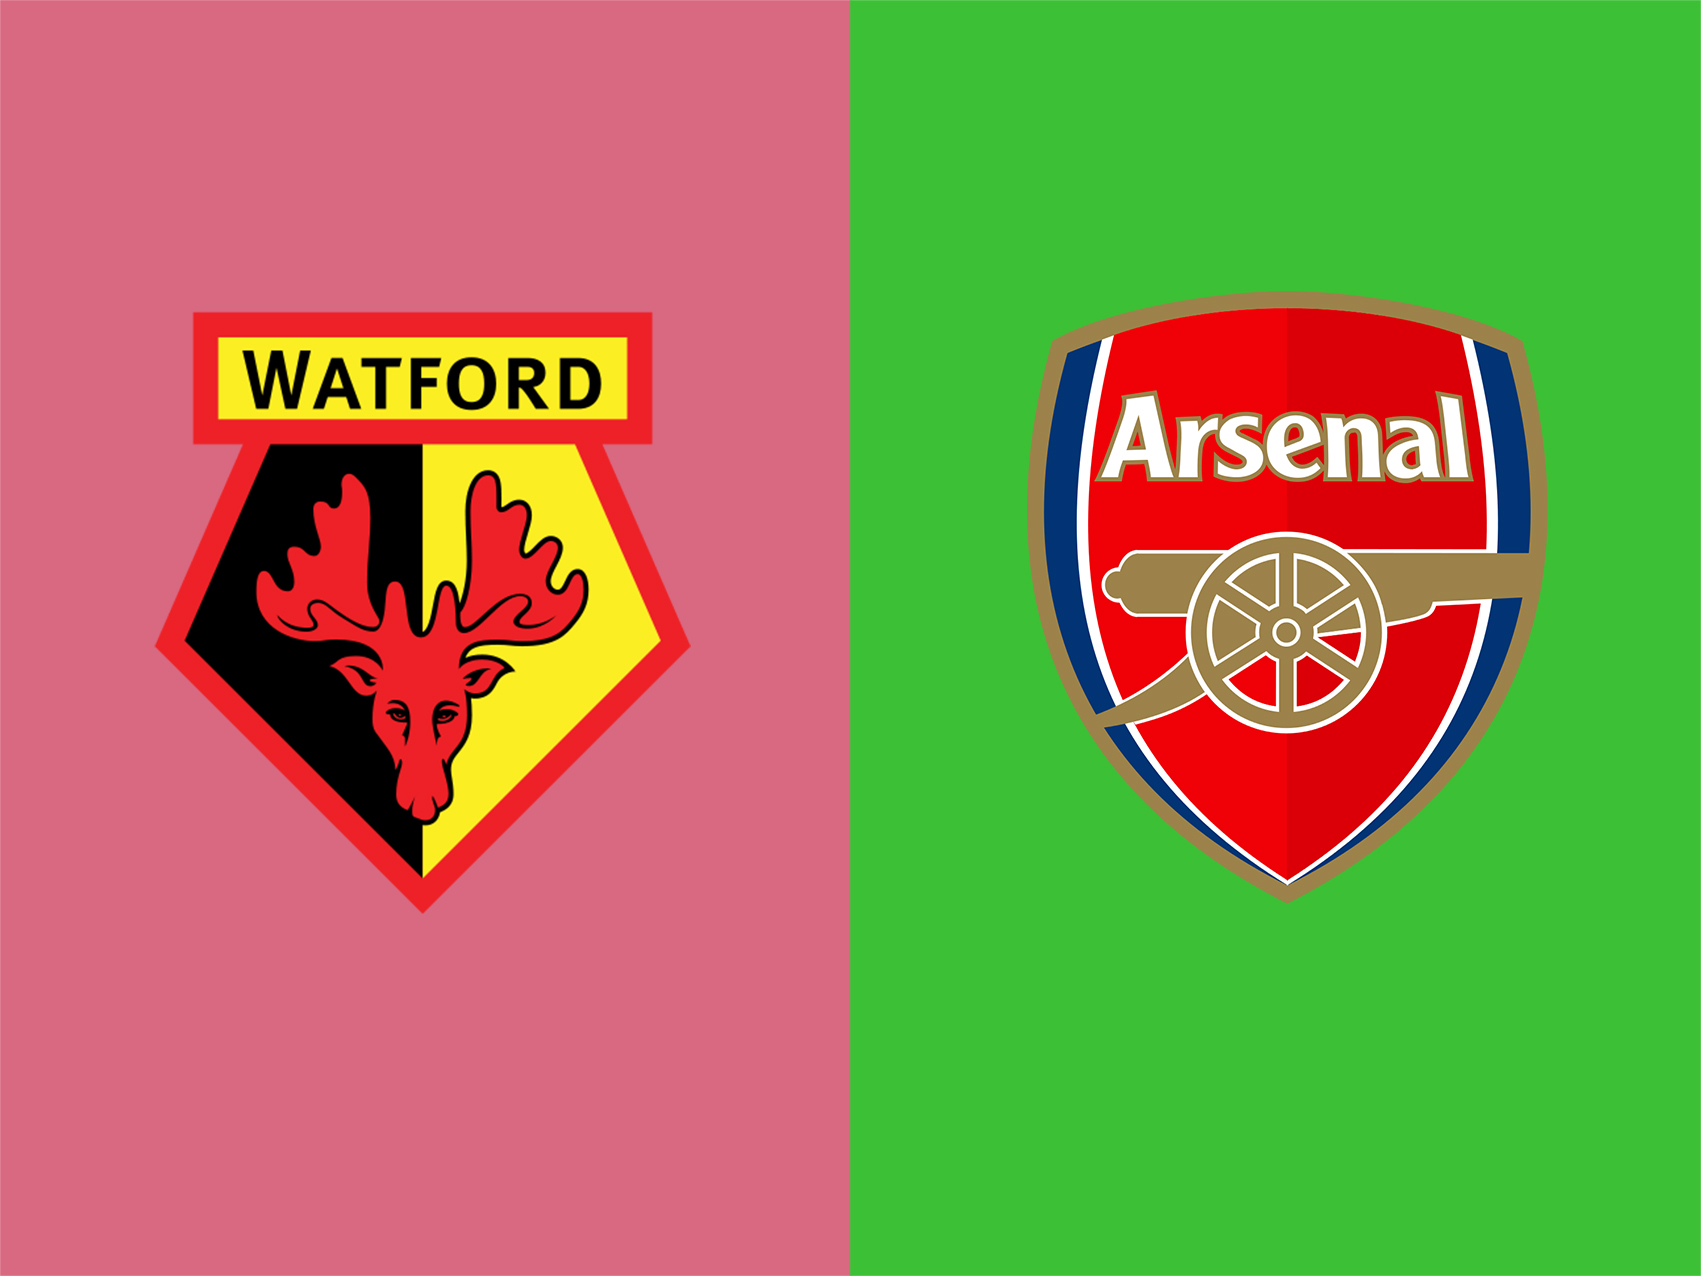 soi-keo-ca-cuoc-bong-da-ngay-14-9-Watford-vs-Arsenal-do-it-thang-do-nhieu-b9